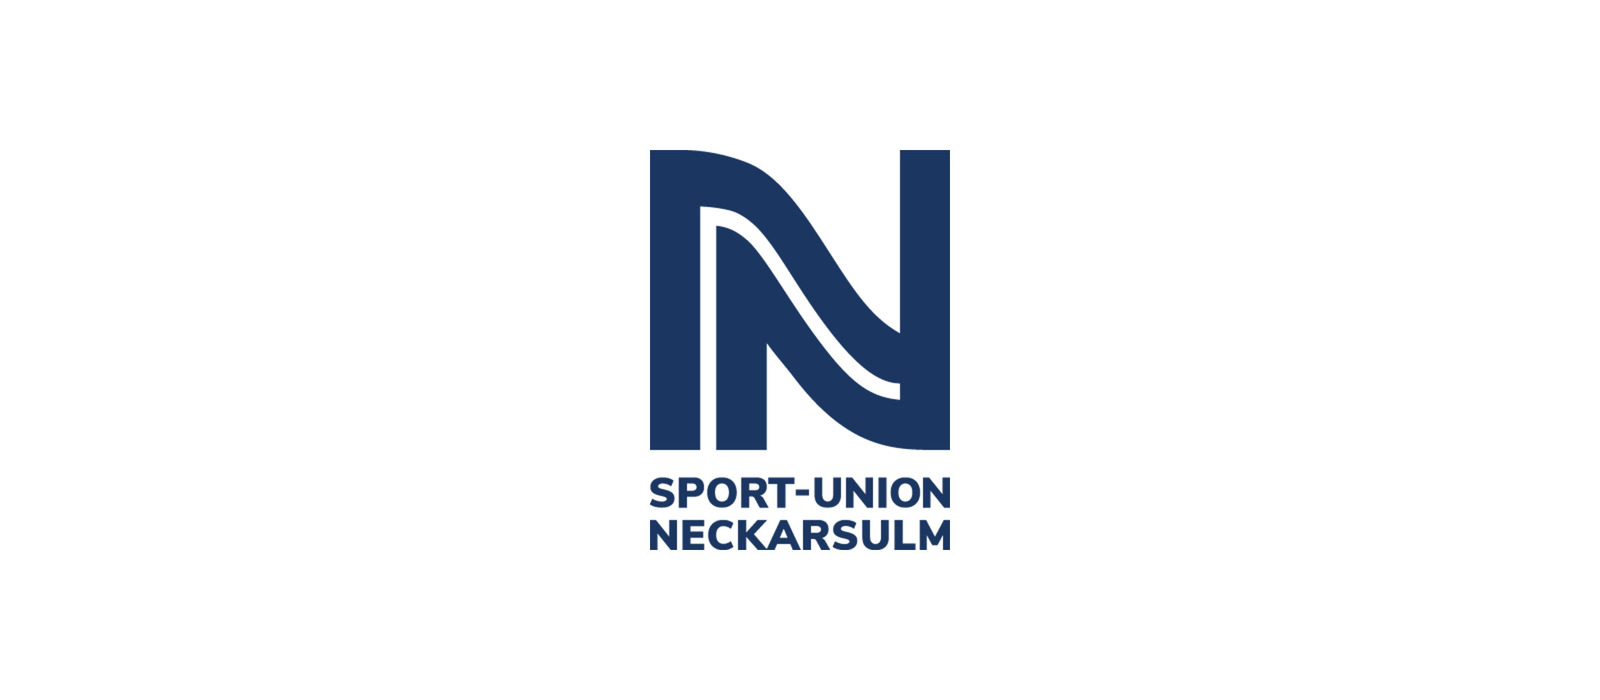 Sport-Union Neckarsulm vs SV Union Halle-Neustadt